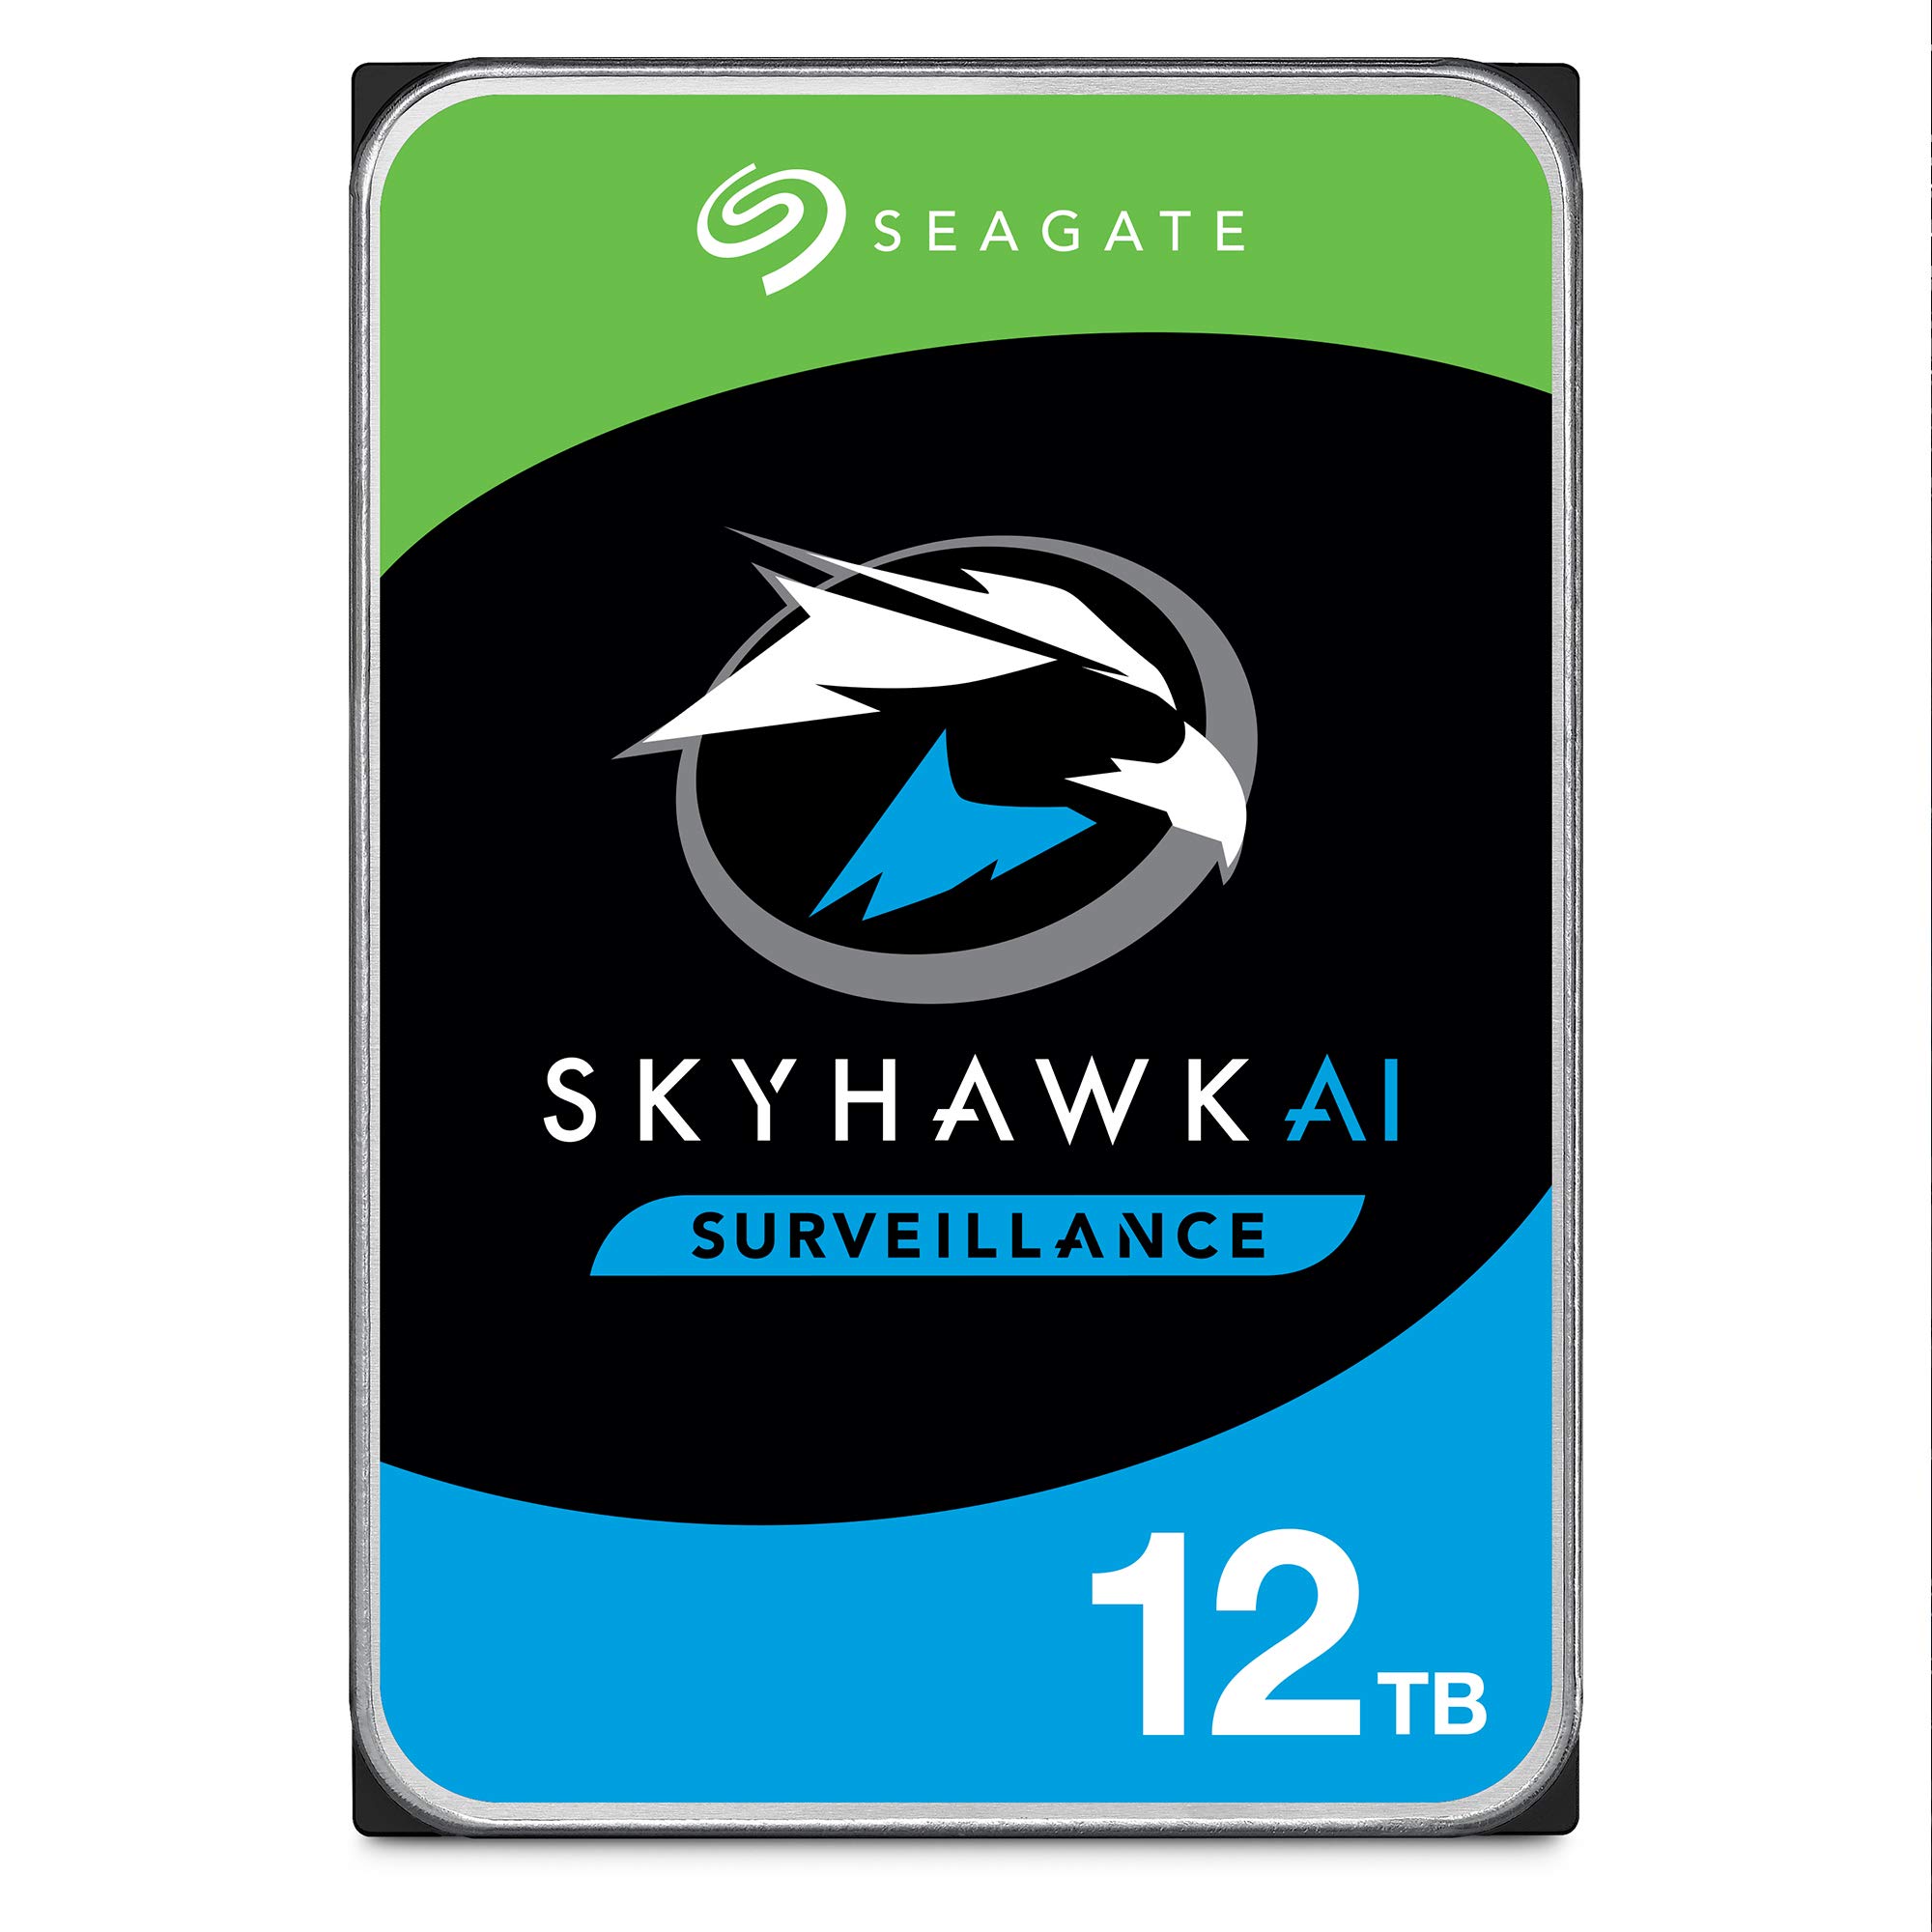 Seagate Skyhawk AI 12TB Video Internal Hard Drive HDD 3.5 Inch SATA 6Gbs 256MB Cache for DVR NVR Security Camera System